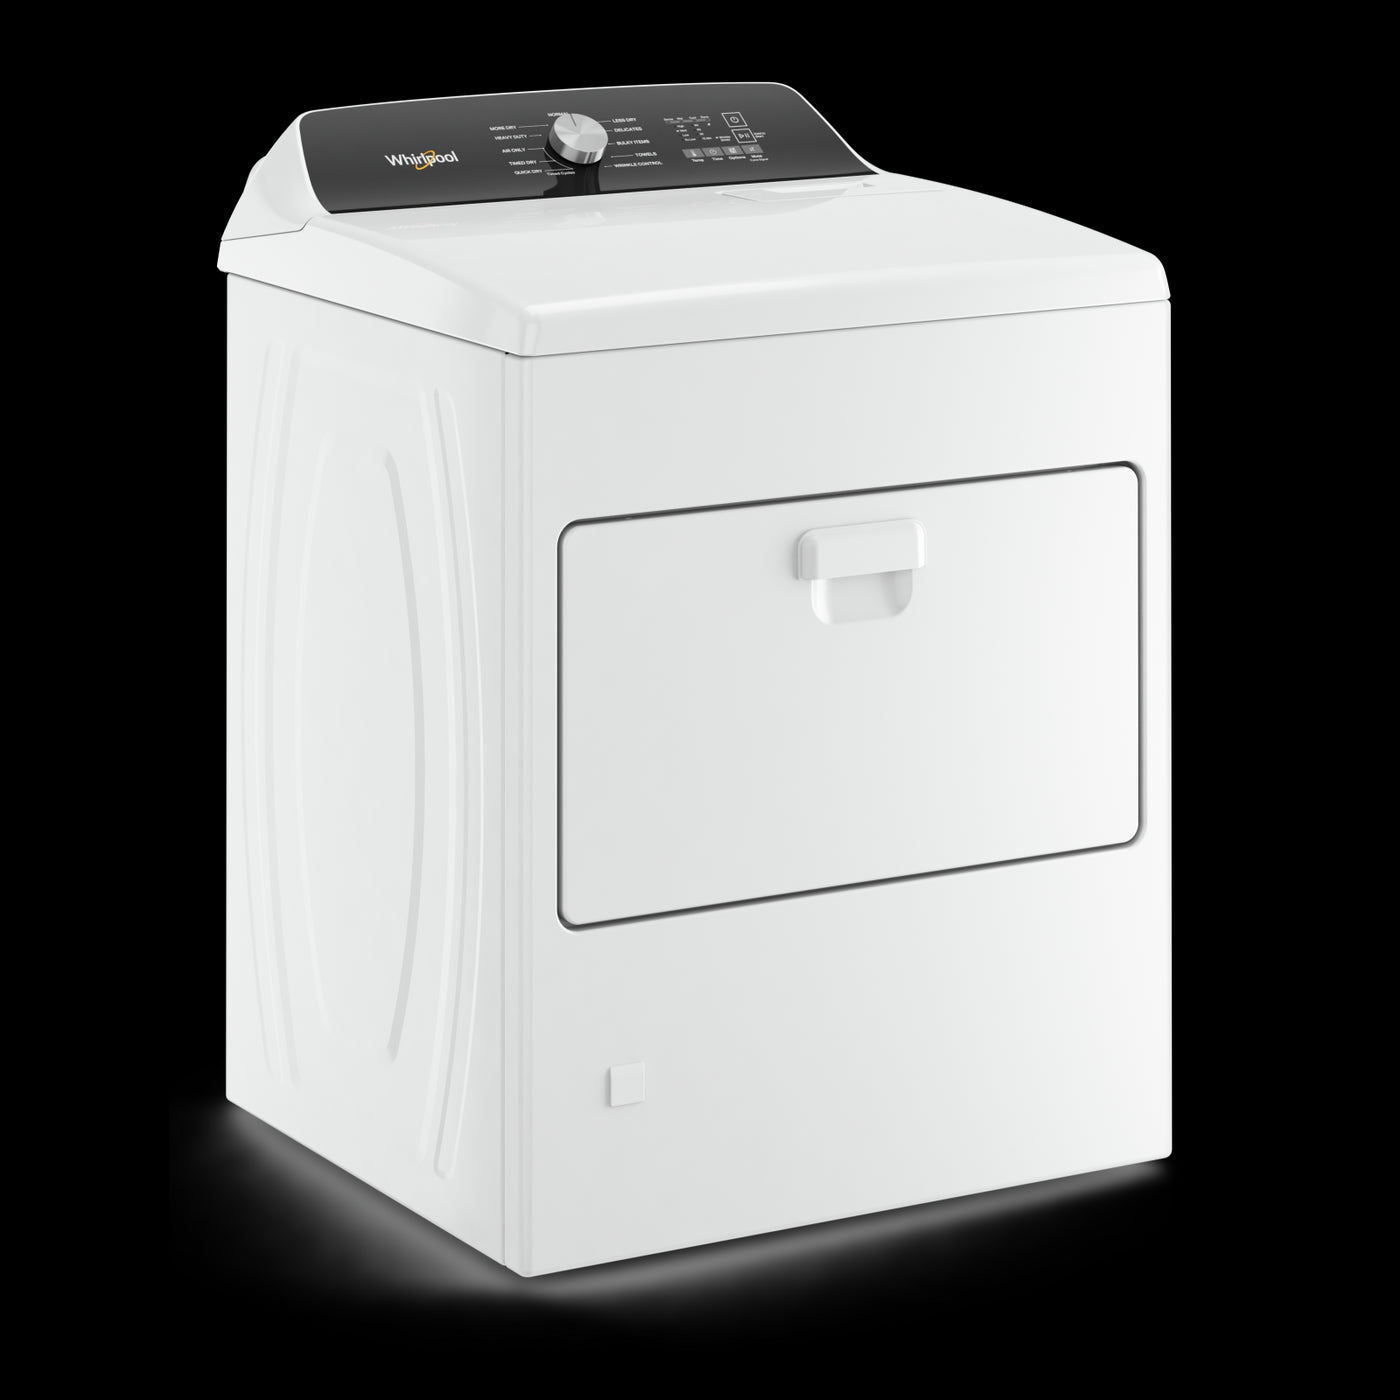 Whirlpool White Gas Dryer with Moisture Sensing (7.0 Cu.Ft) - WGD5010LW